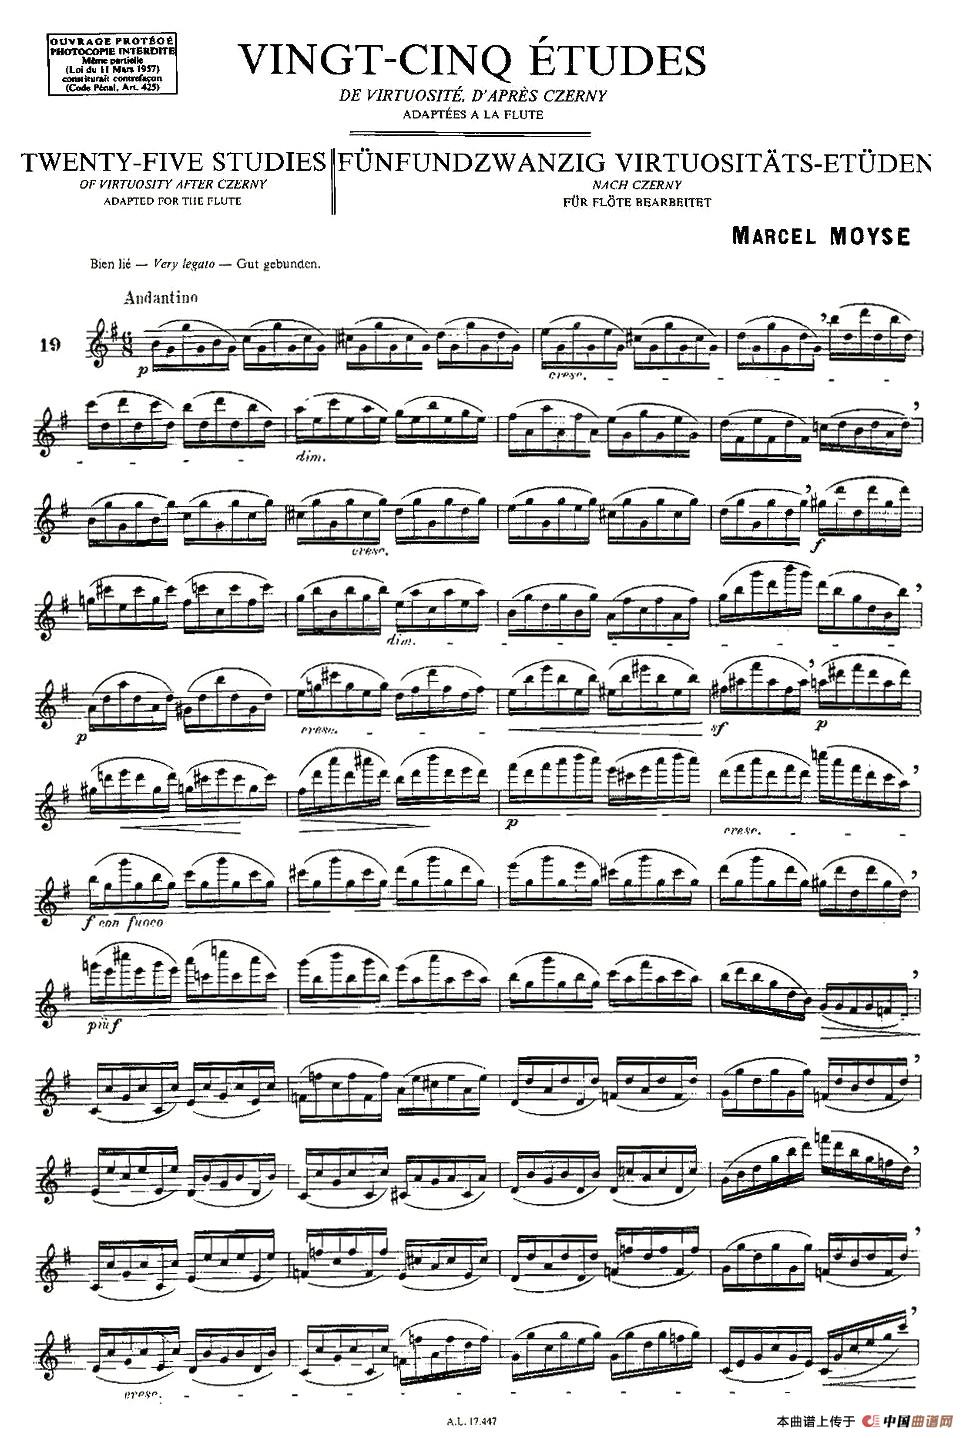 Moyse - 25 Studies after Czerny flute 之19（25首改编自车